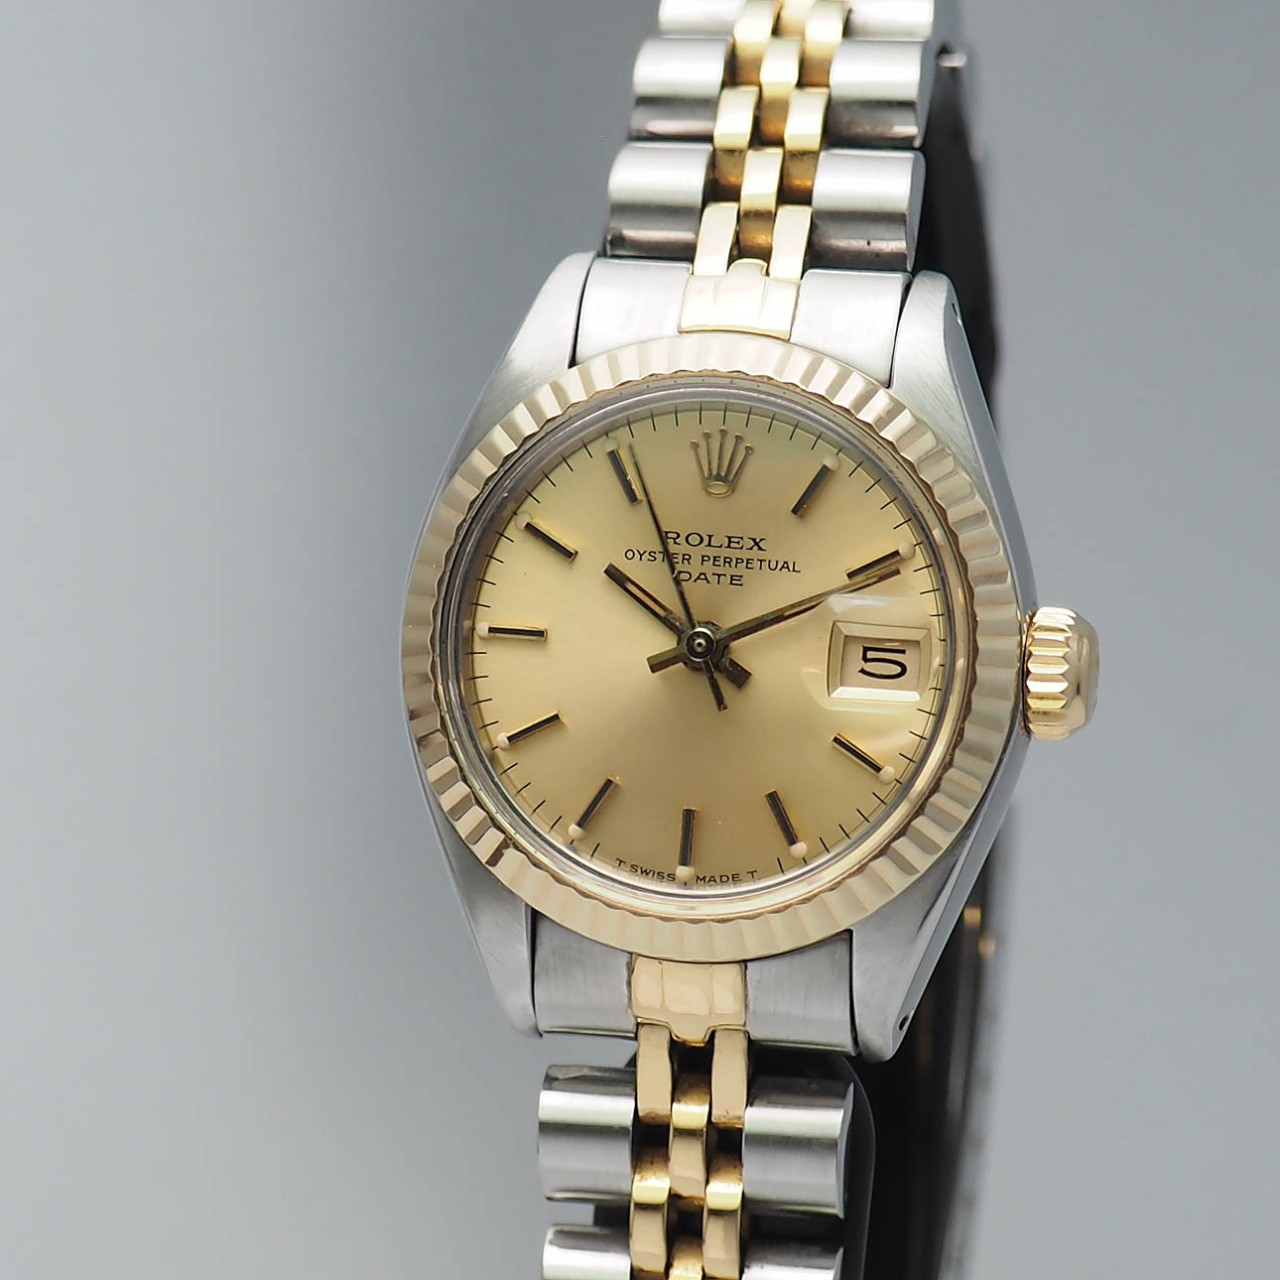 Rolex Date Lady Automatic, 6917, Stahl/ Gold 18k/750, Box+Papiere